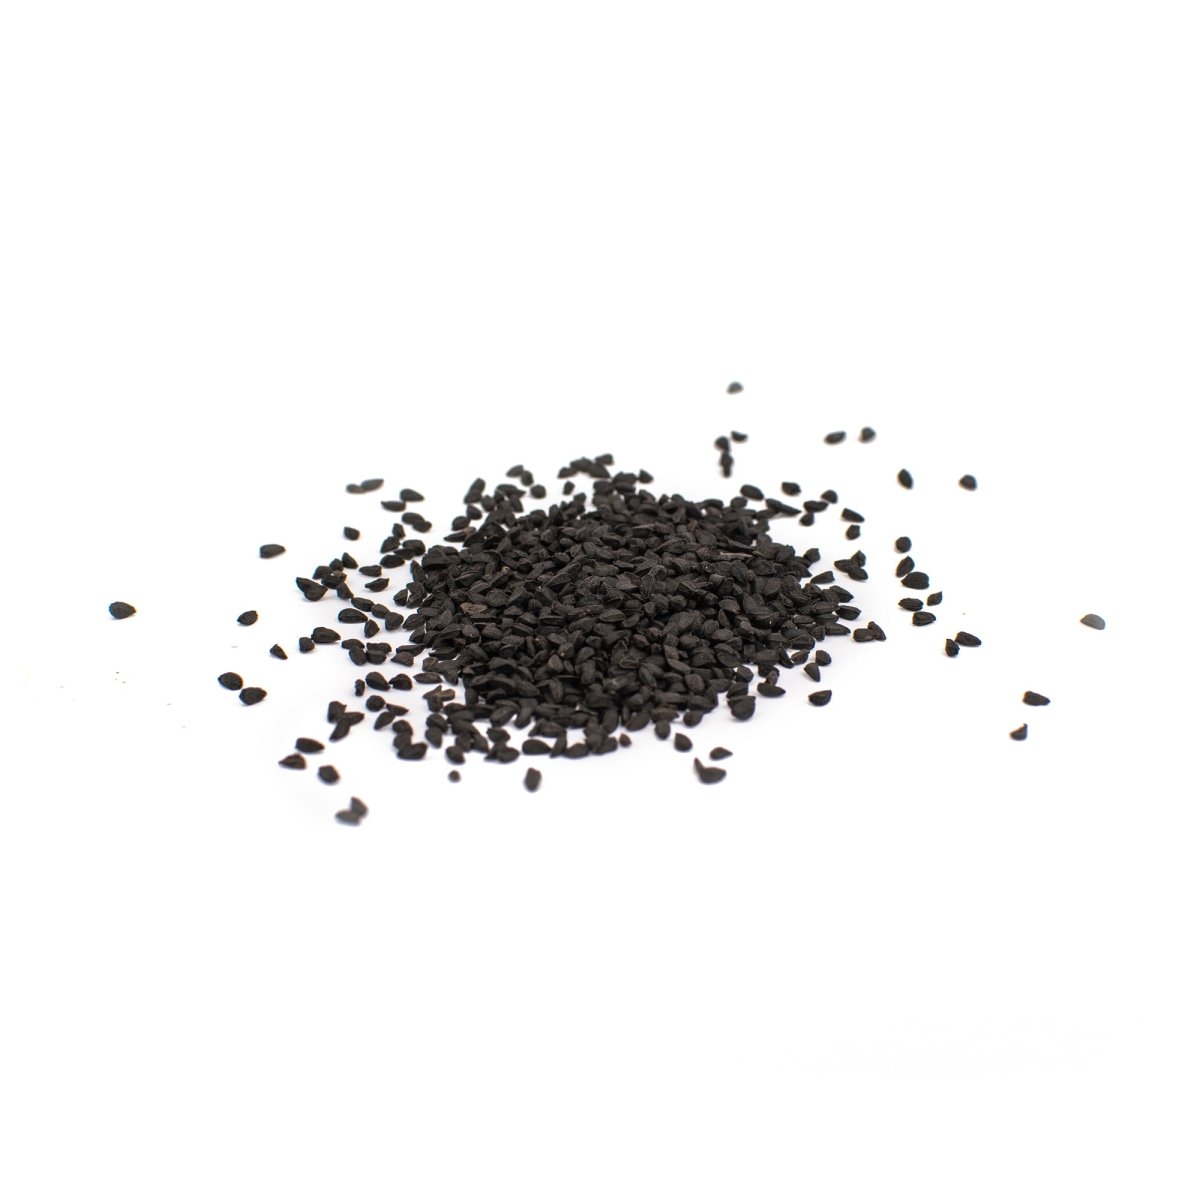 Nigella Seeds / Kalonji Seeds - Tulsidas